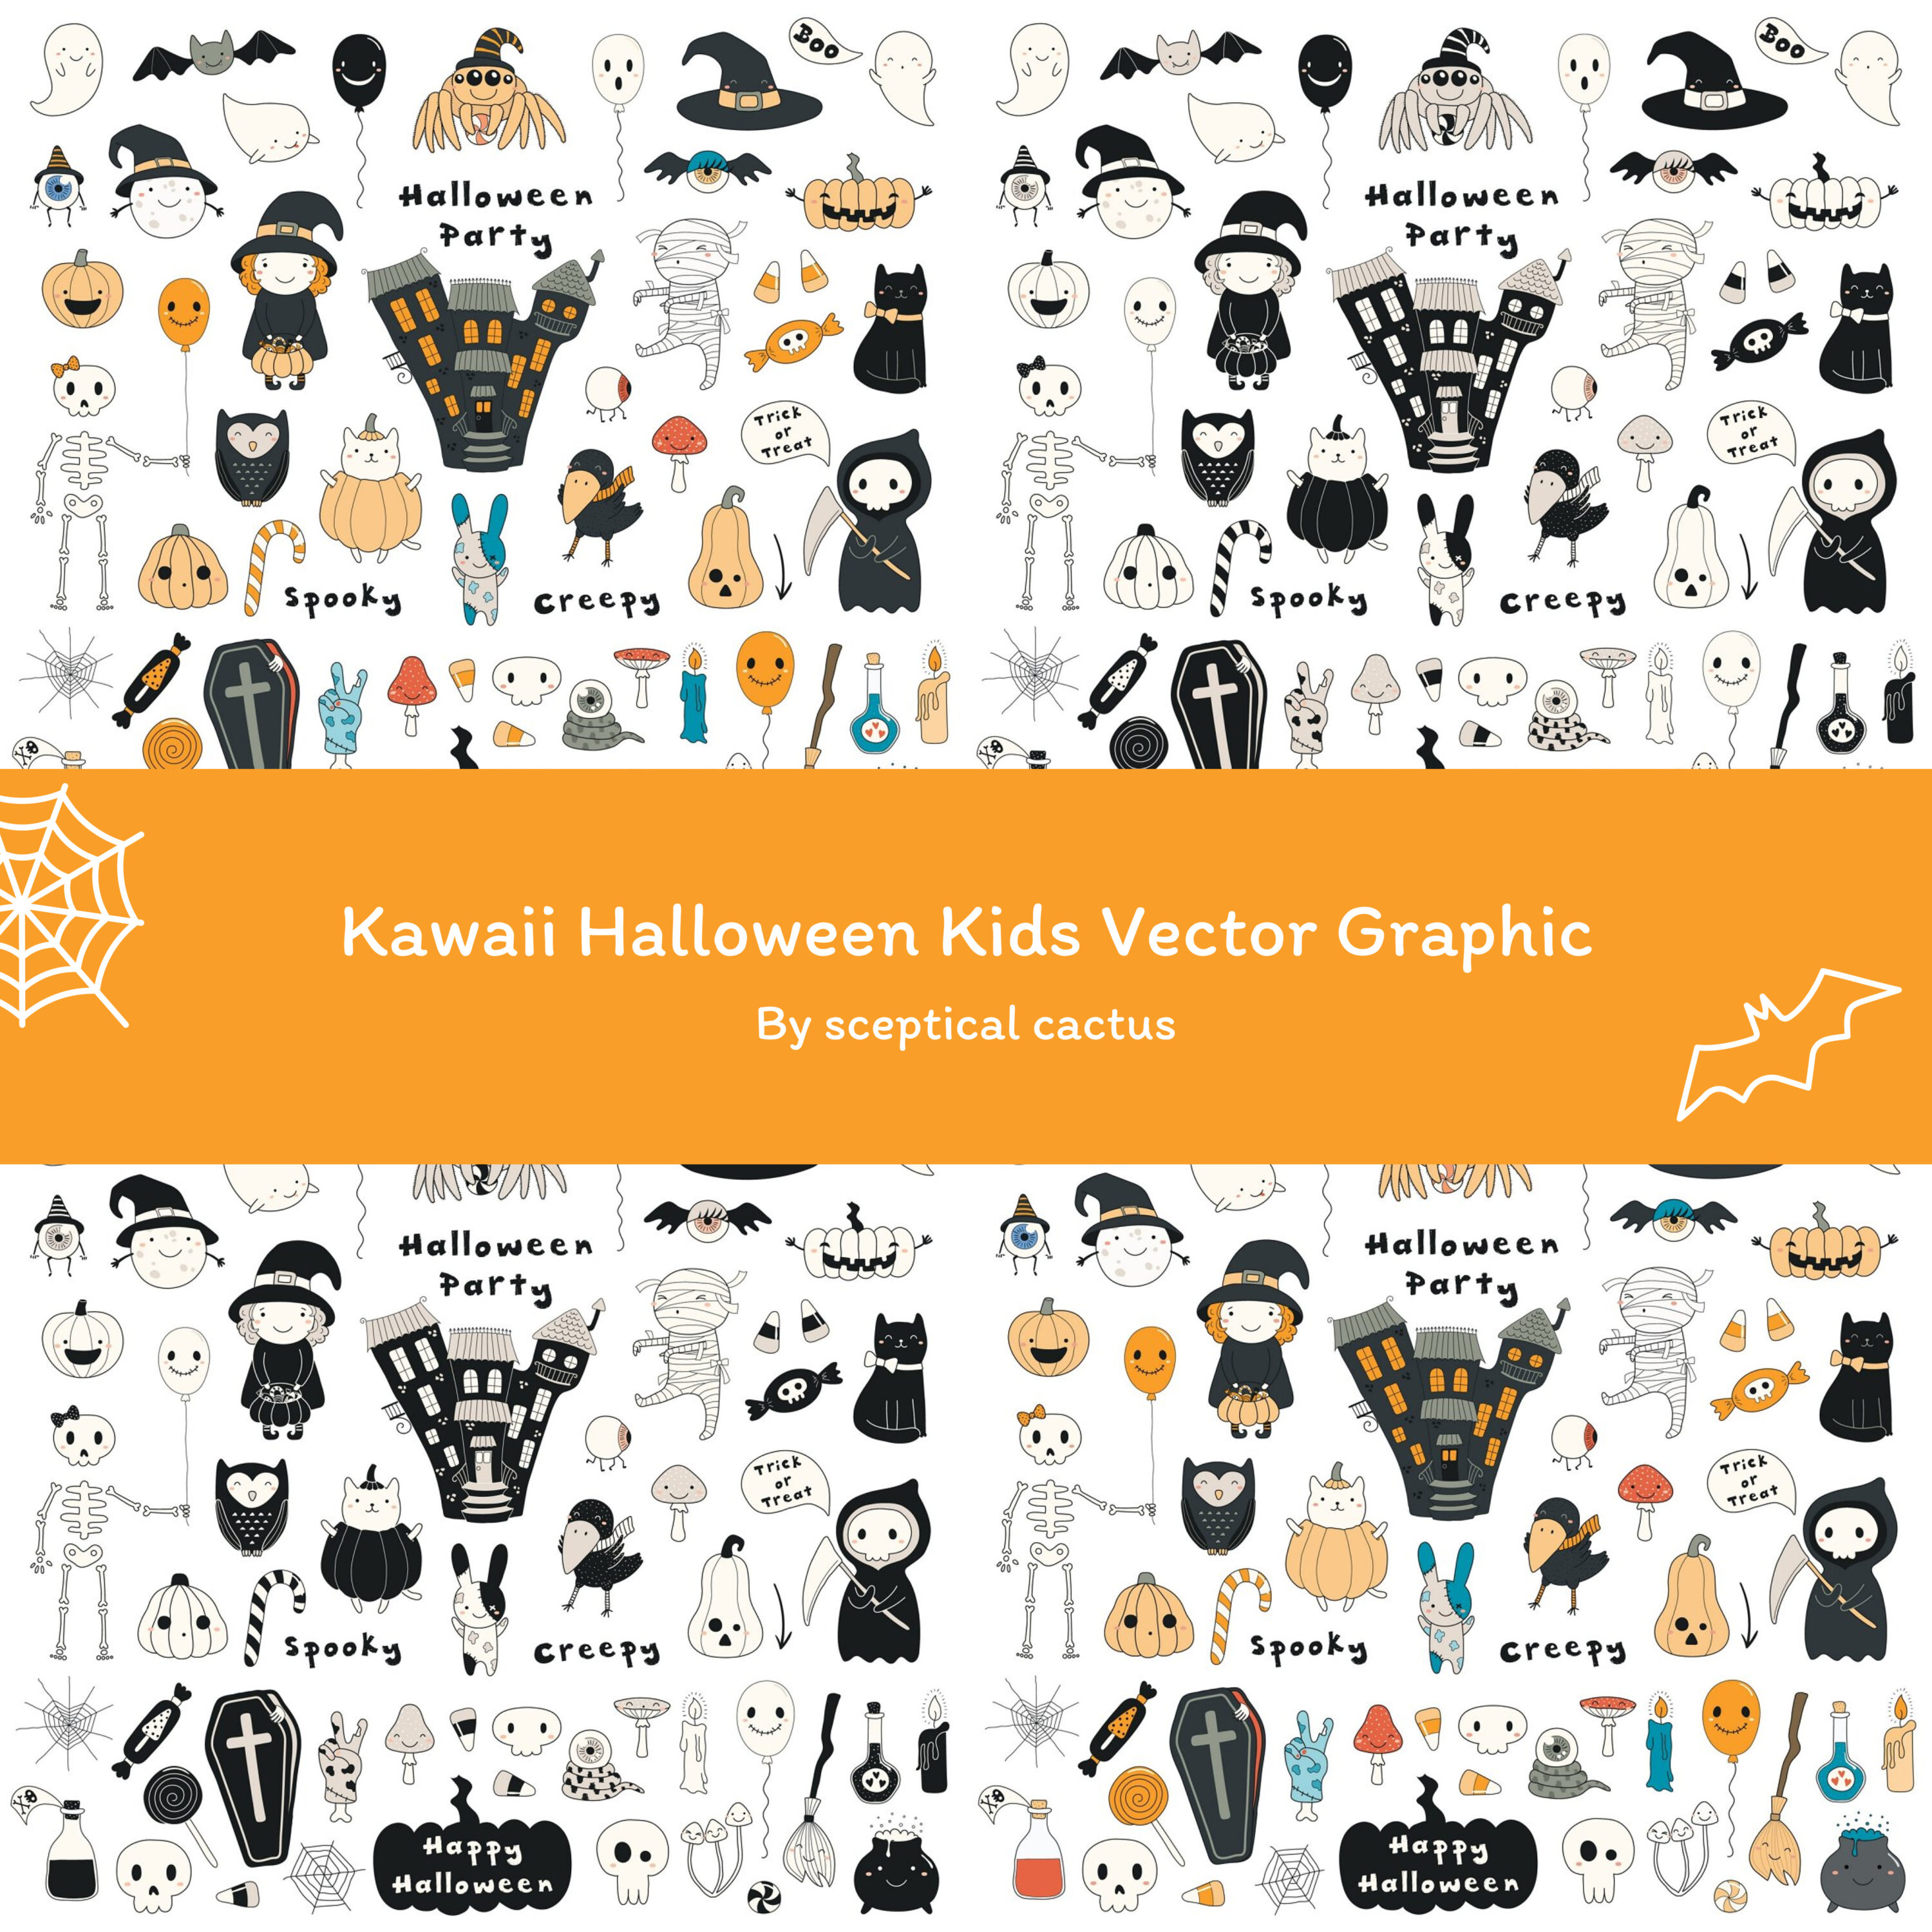 Prints of kawaii halloween kids vector graphic.